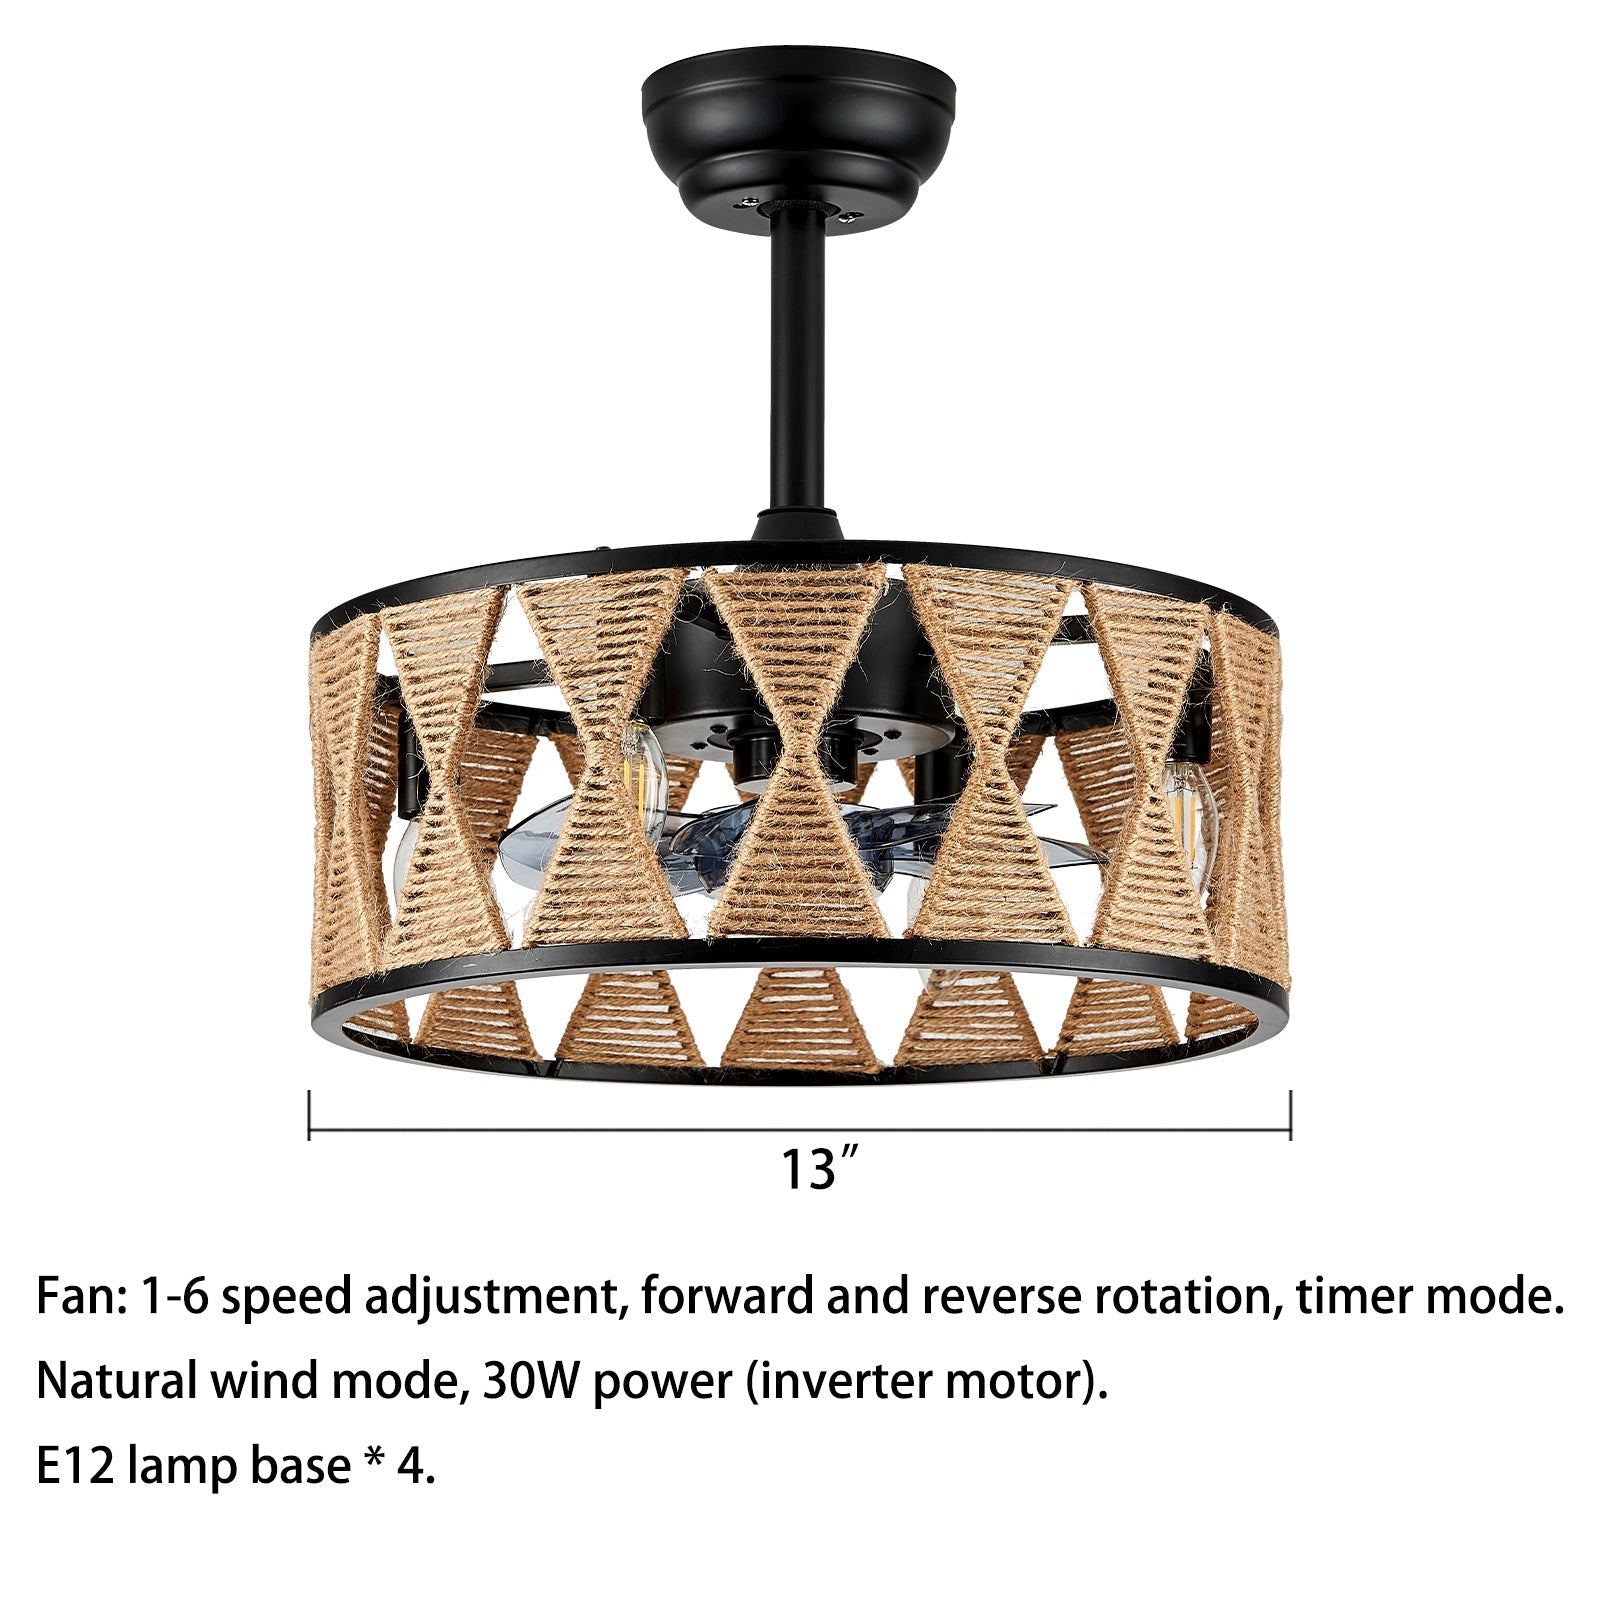 Hugo 6-Speed Ceiling Fan Light: Reverse, Timer, Natural Wind, 30W, E12 x4, Ceiling Fan Chandelier Over Dining Table, Bedroom